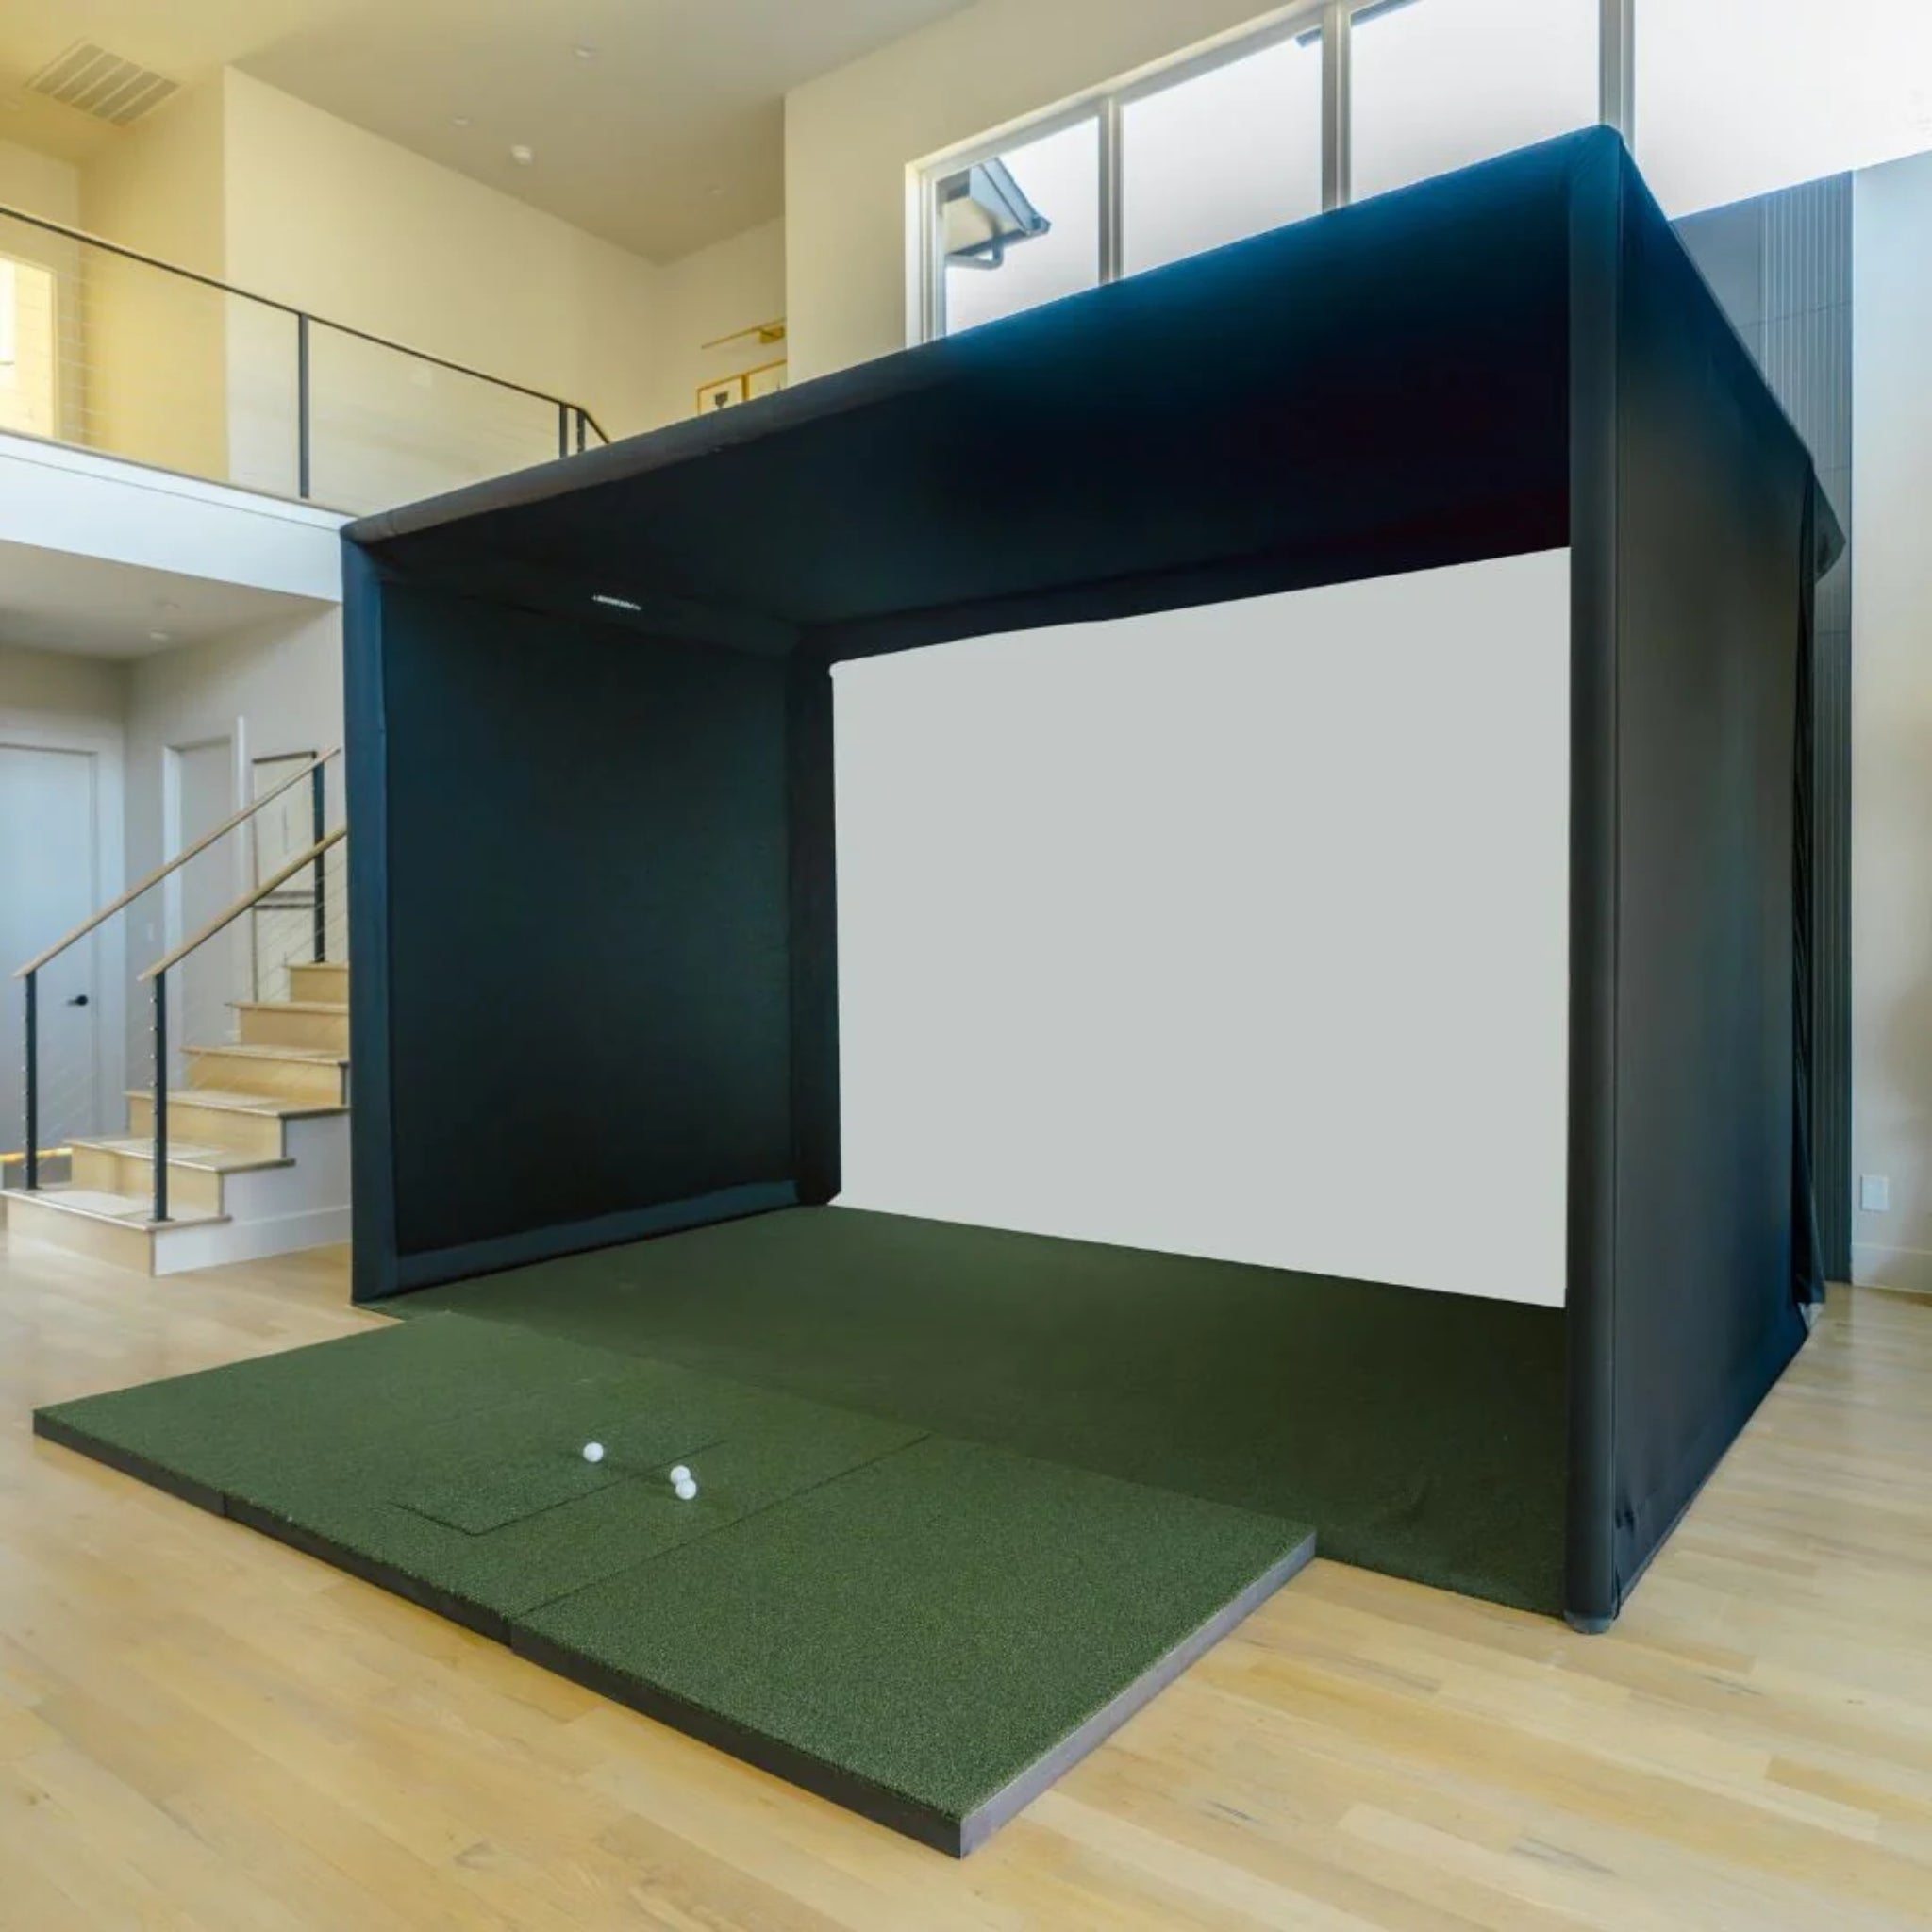 SIGPRO Commercial Golf Simulator Enclosure